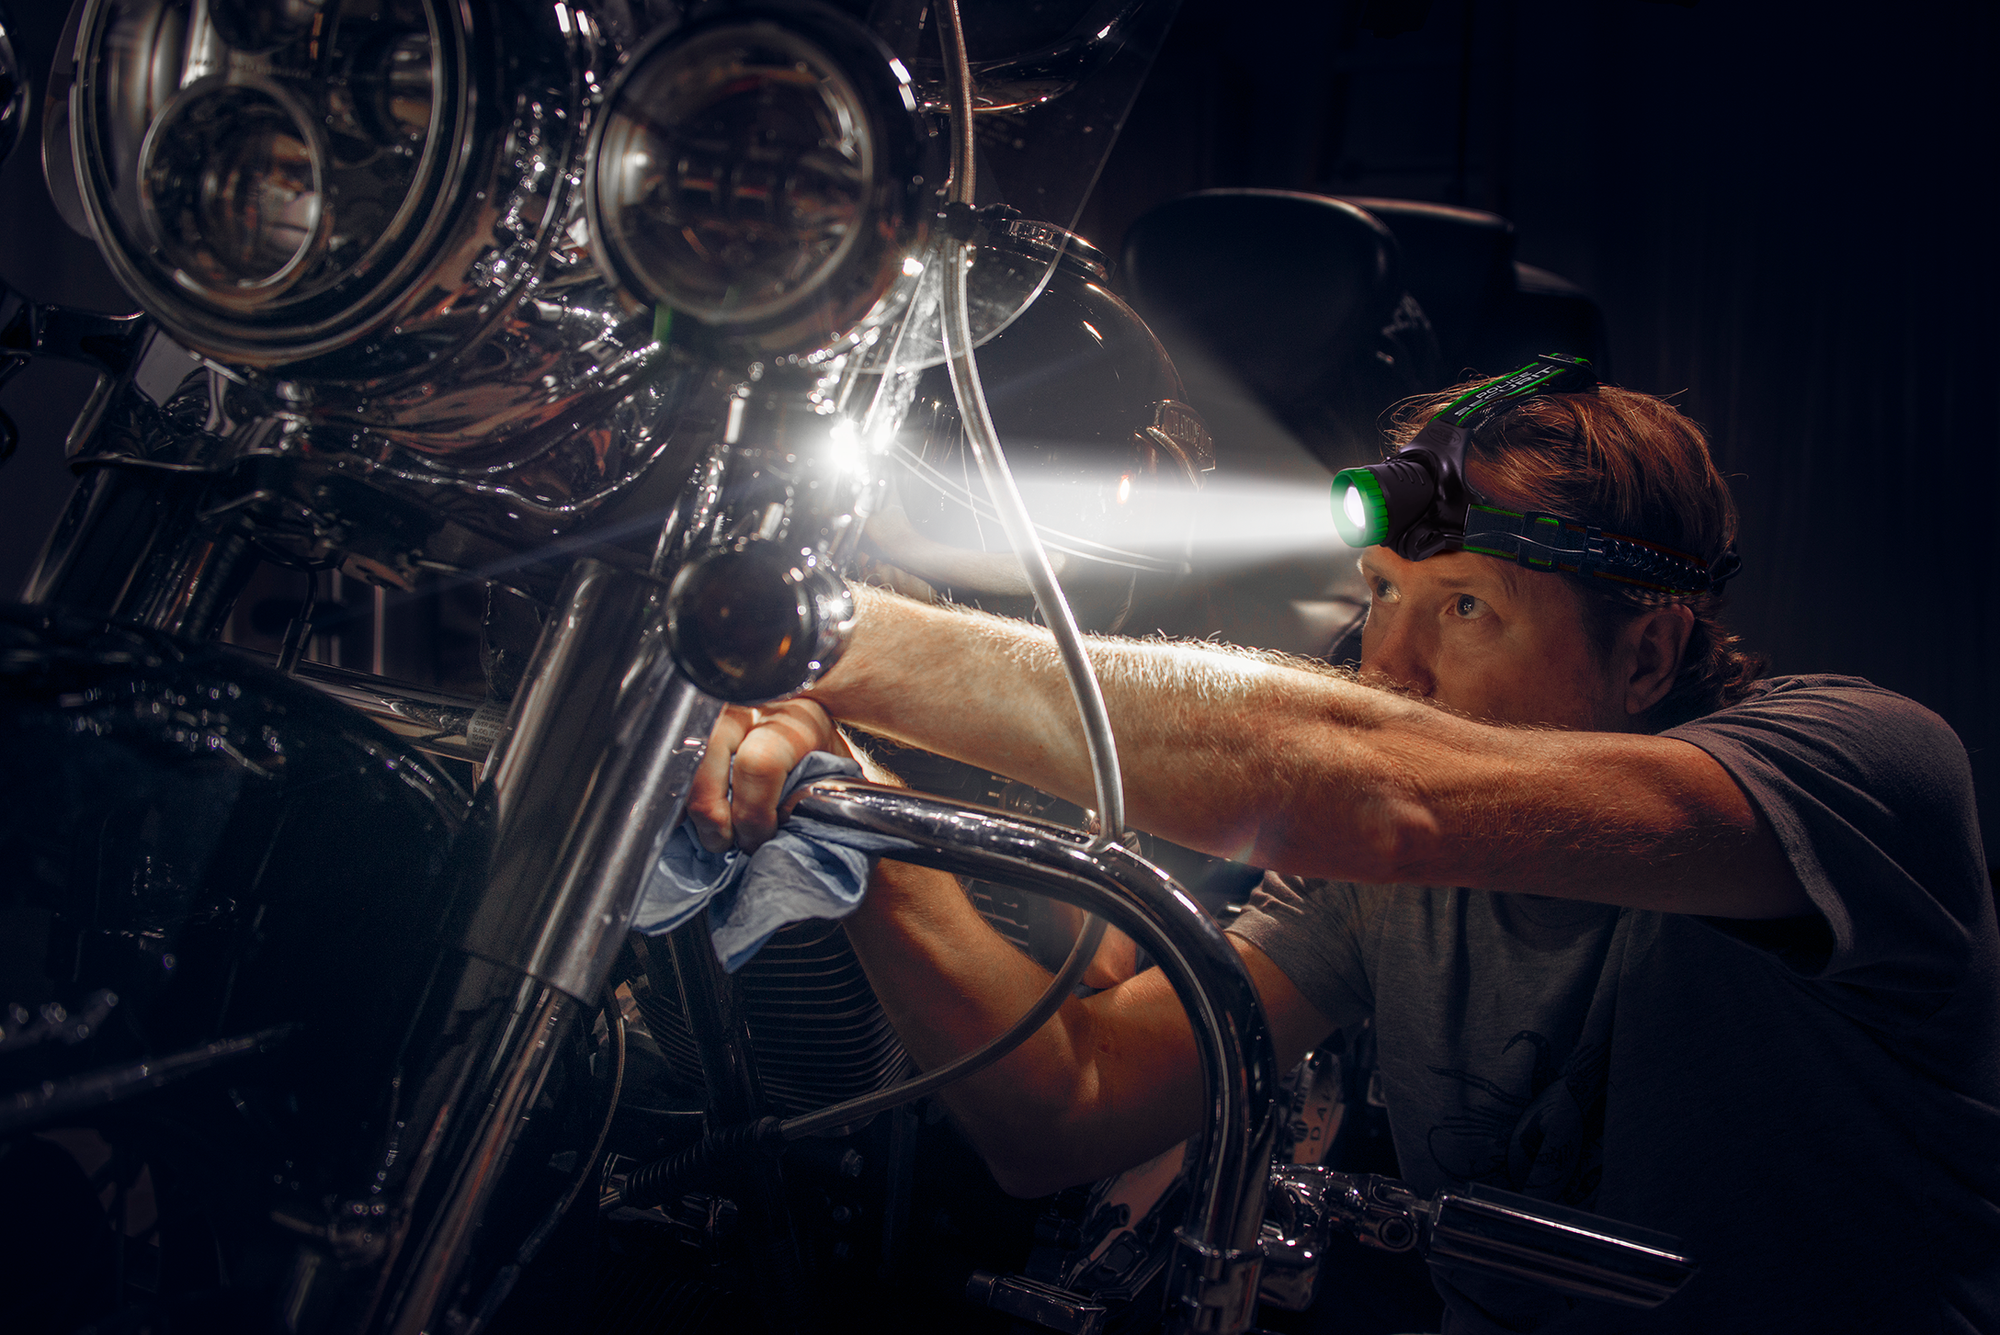 man wearing bright headlamp working on motorcycle